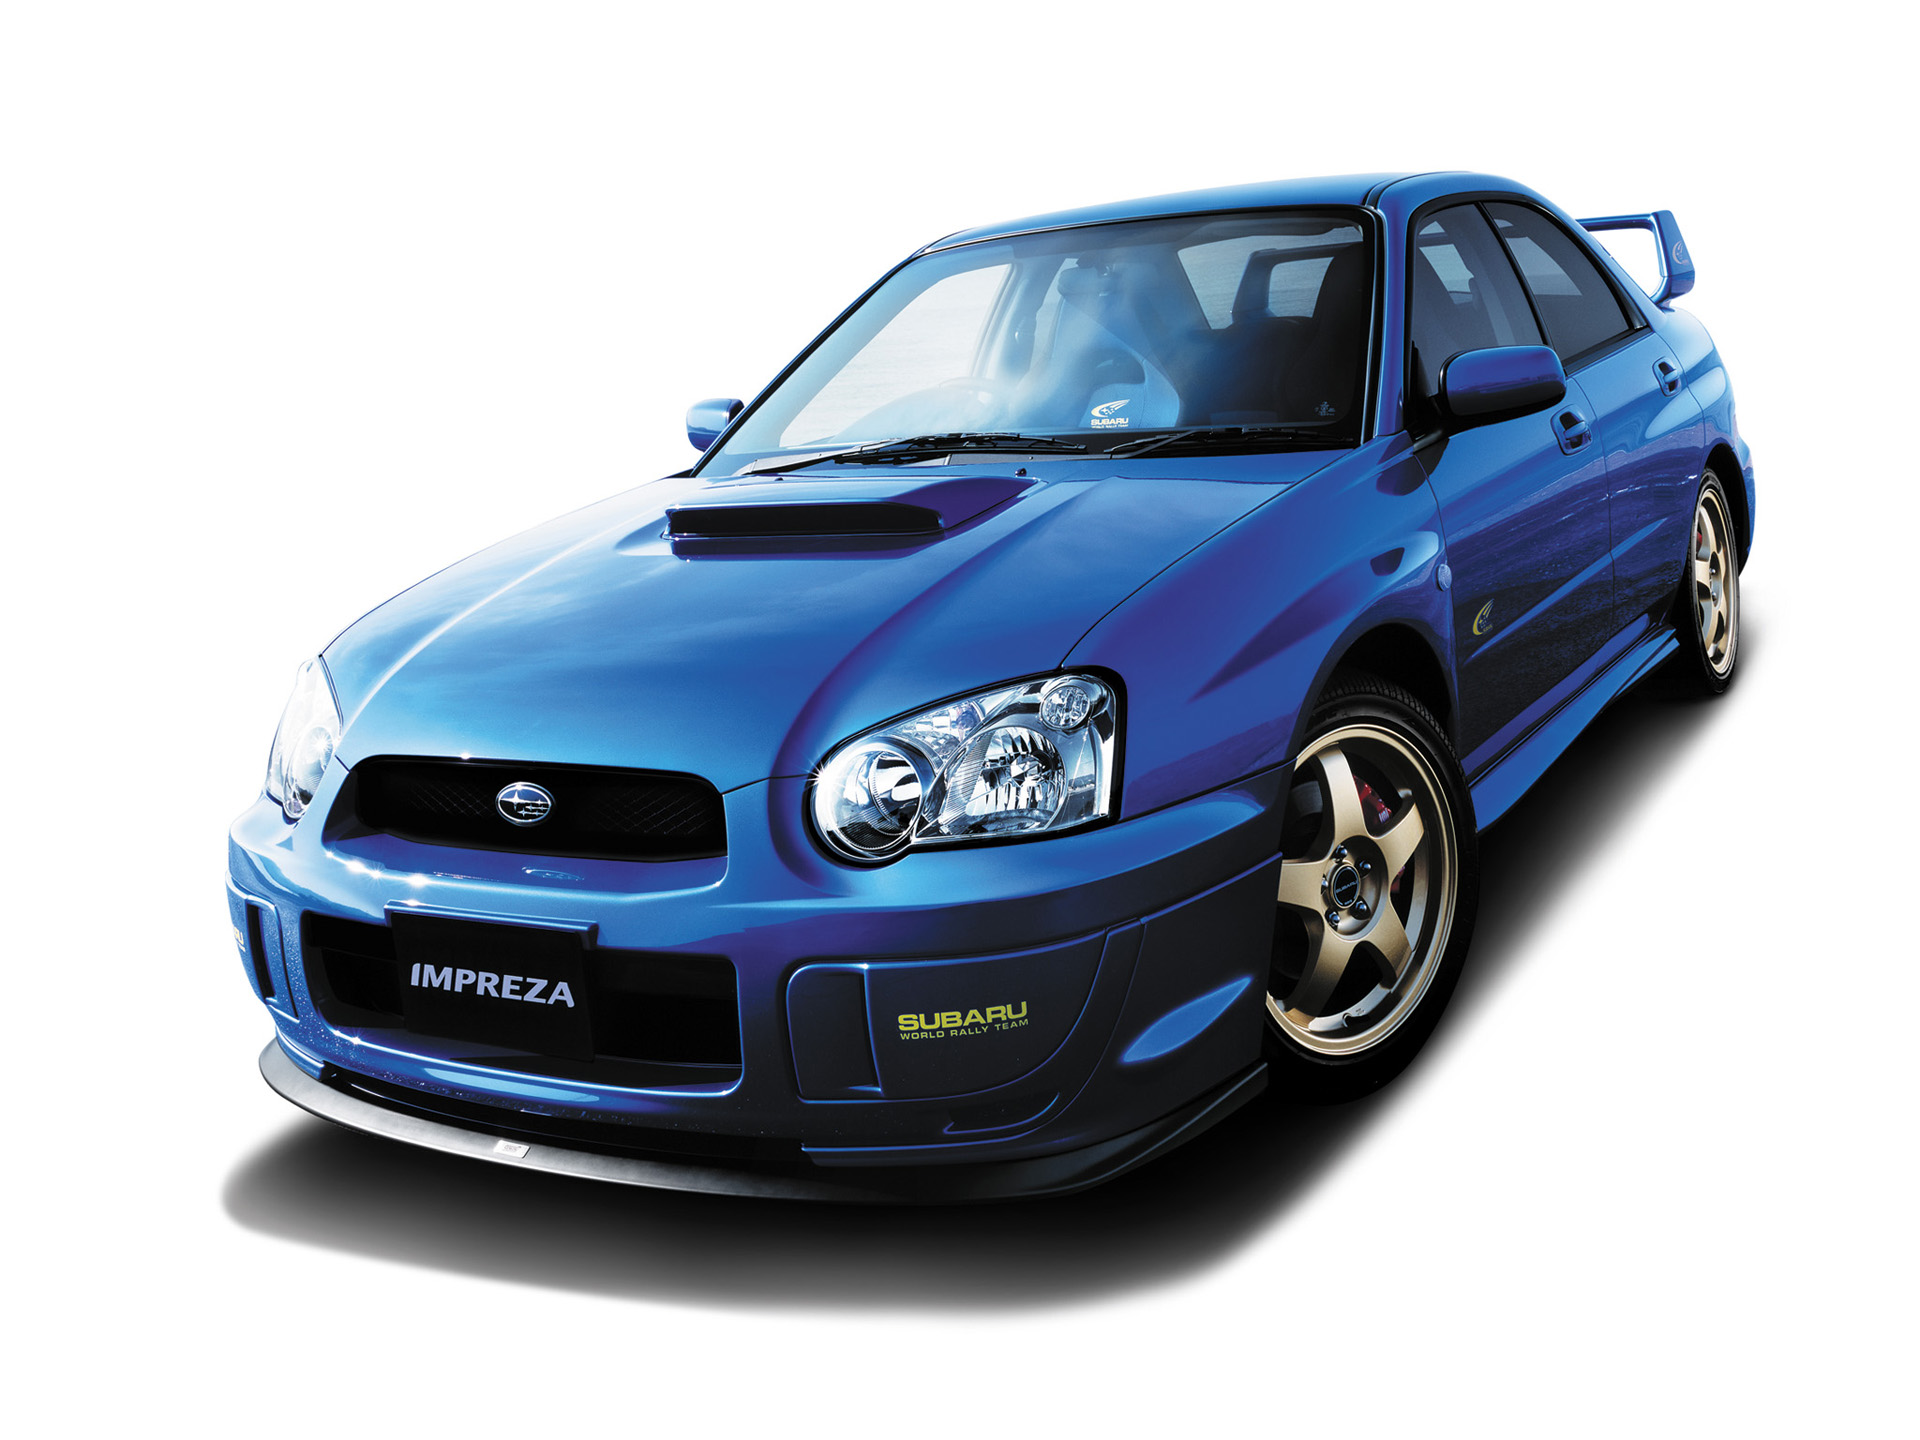 Subaru Impreza Wrx Sti Spec C Wallpaper